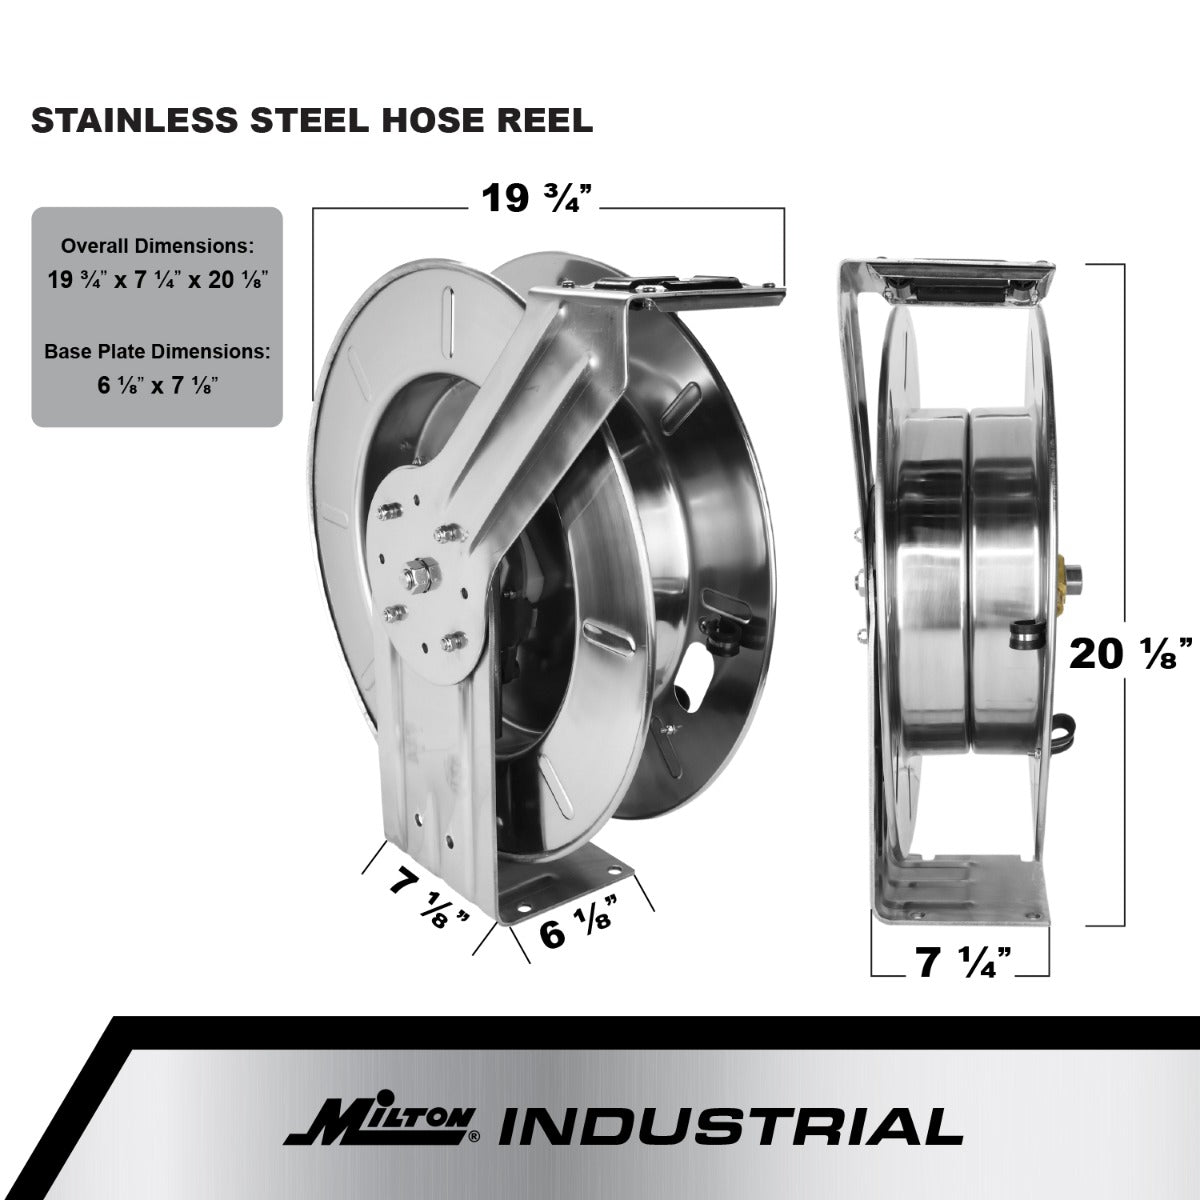 Heavy Duty Stainless Steel Wash Down Hose Reels